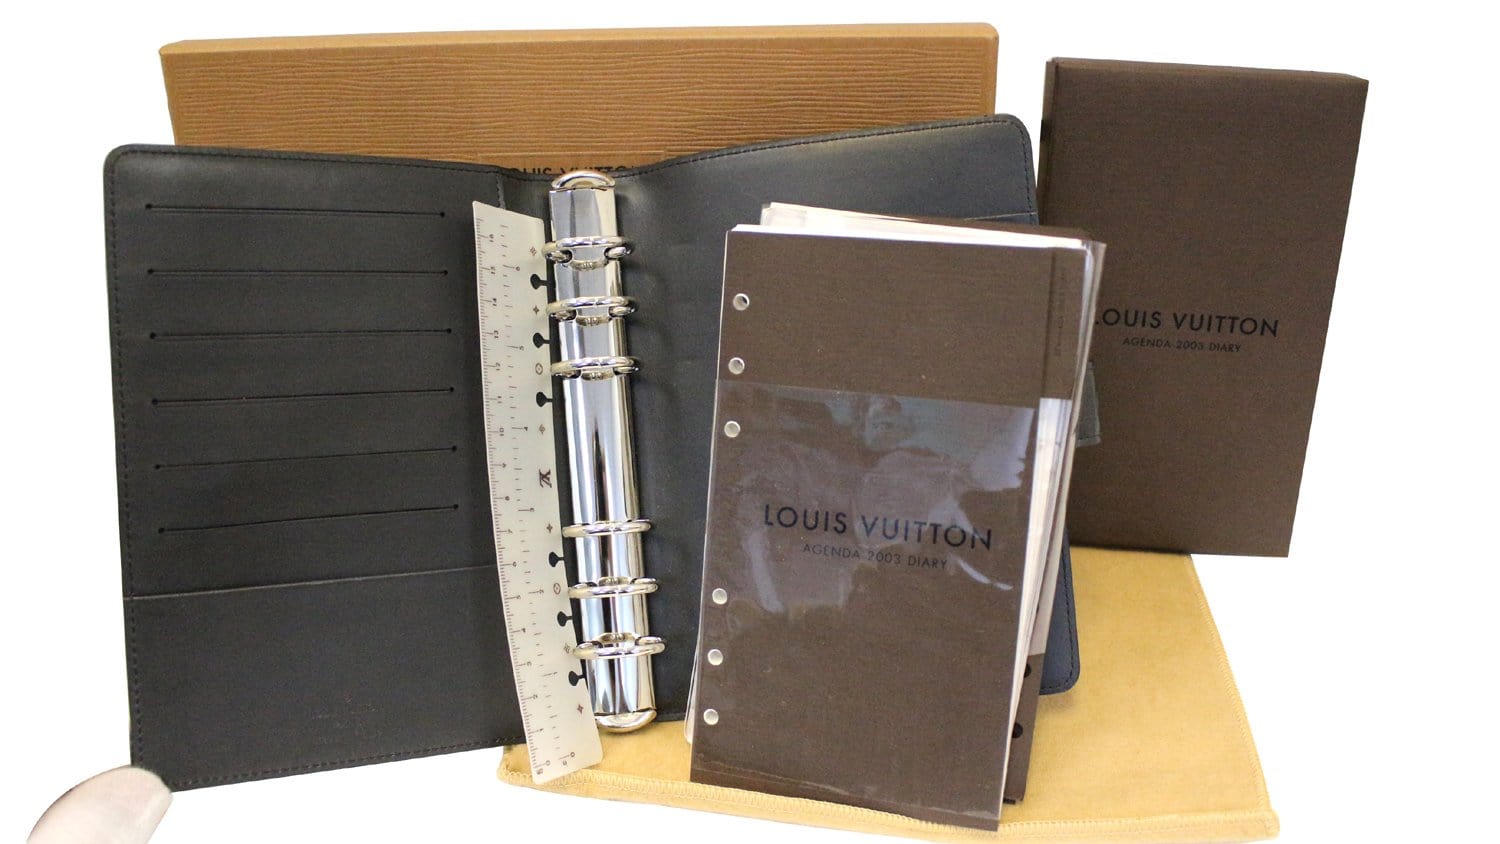 Louis Vuitton Medium Agenda Cover and Refill